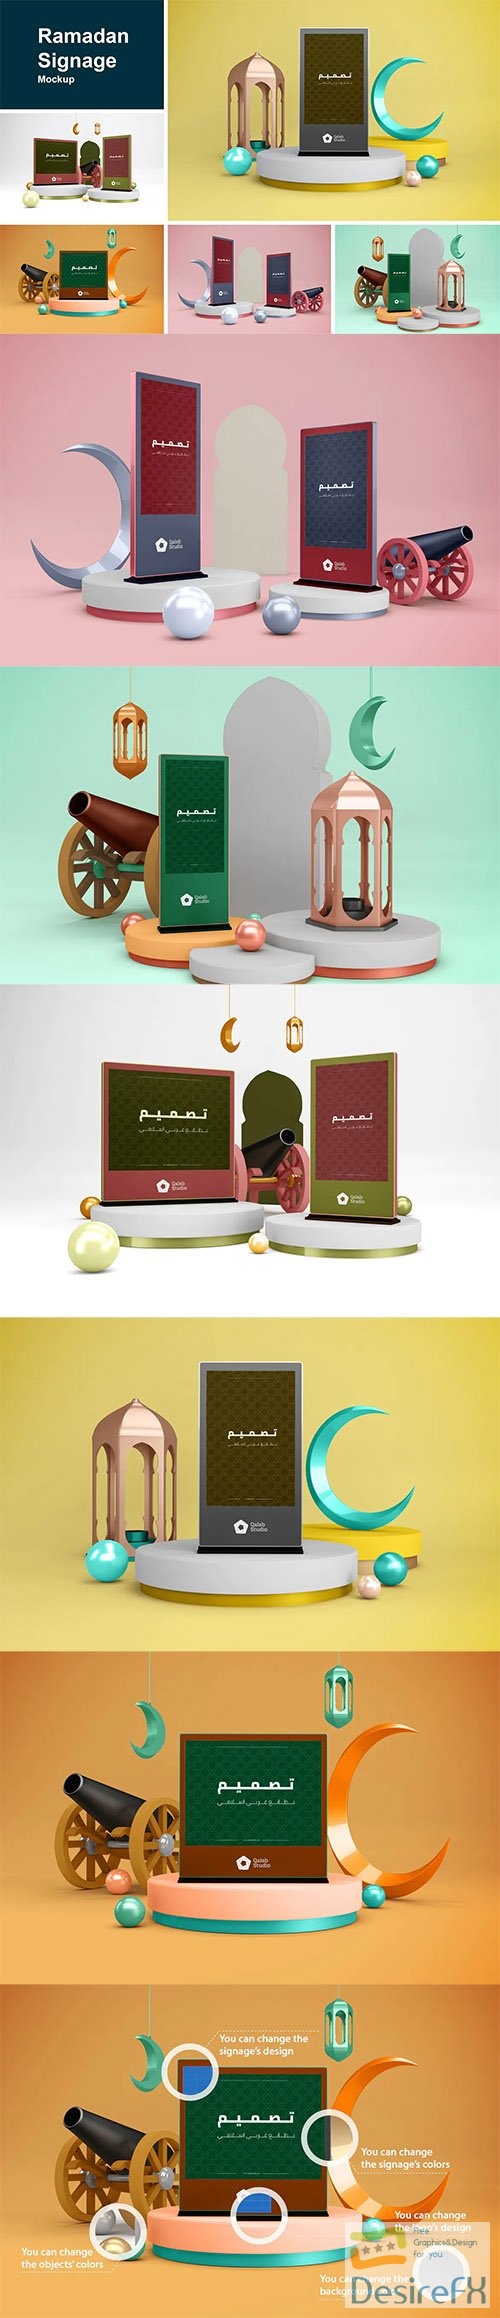 Ramadan Signage